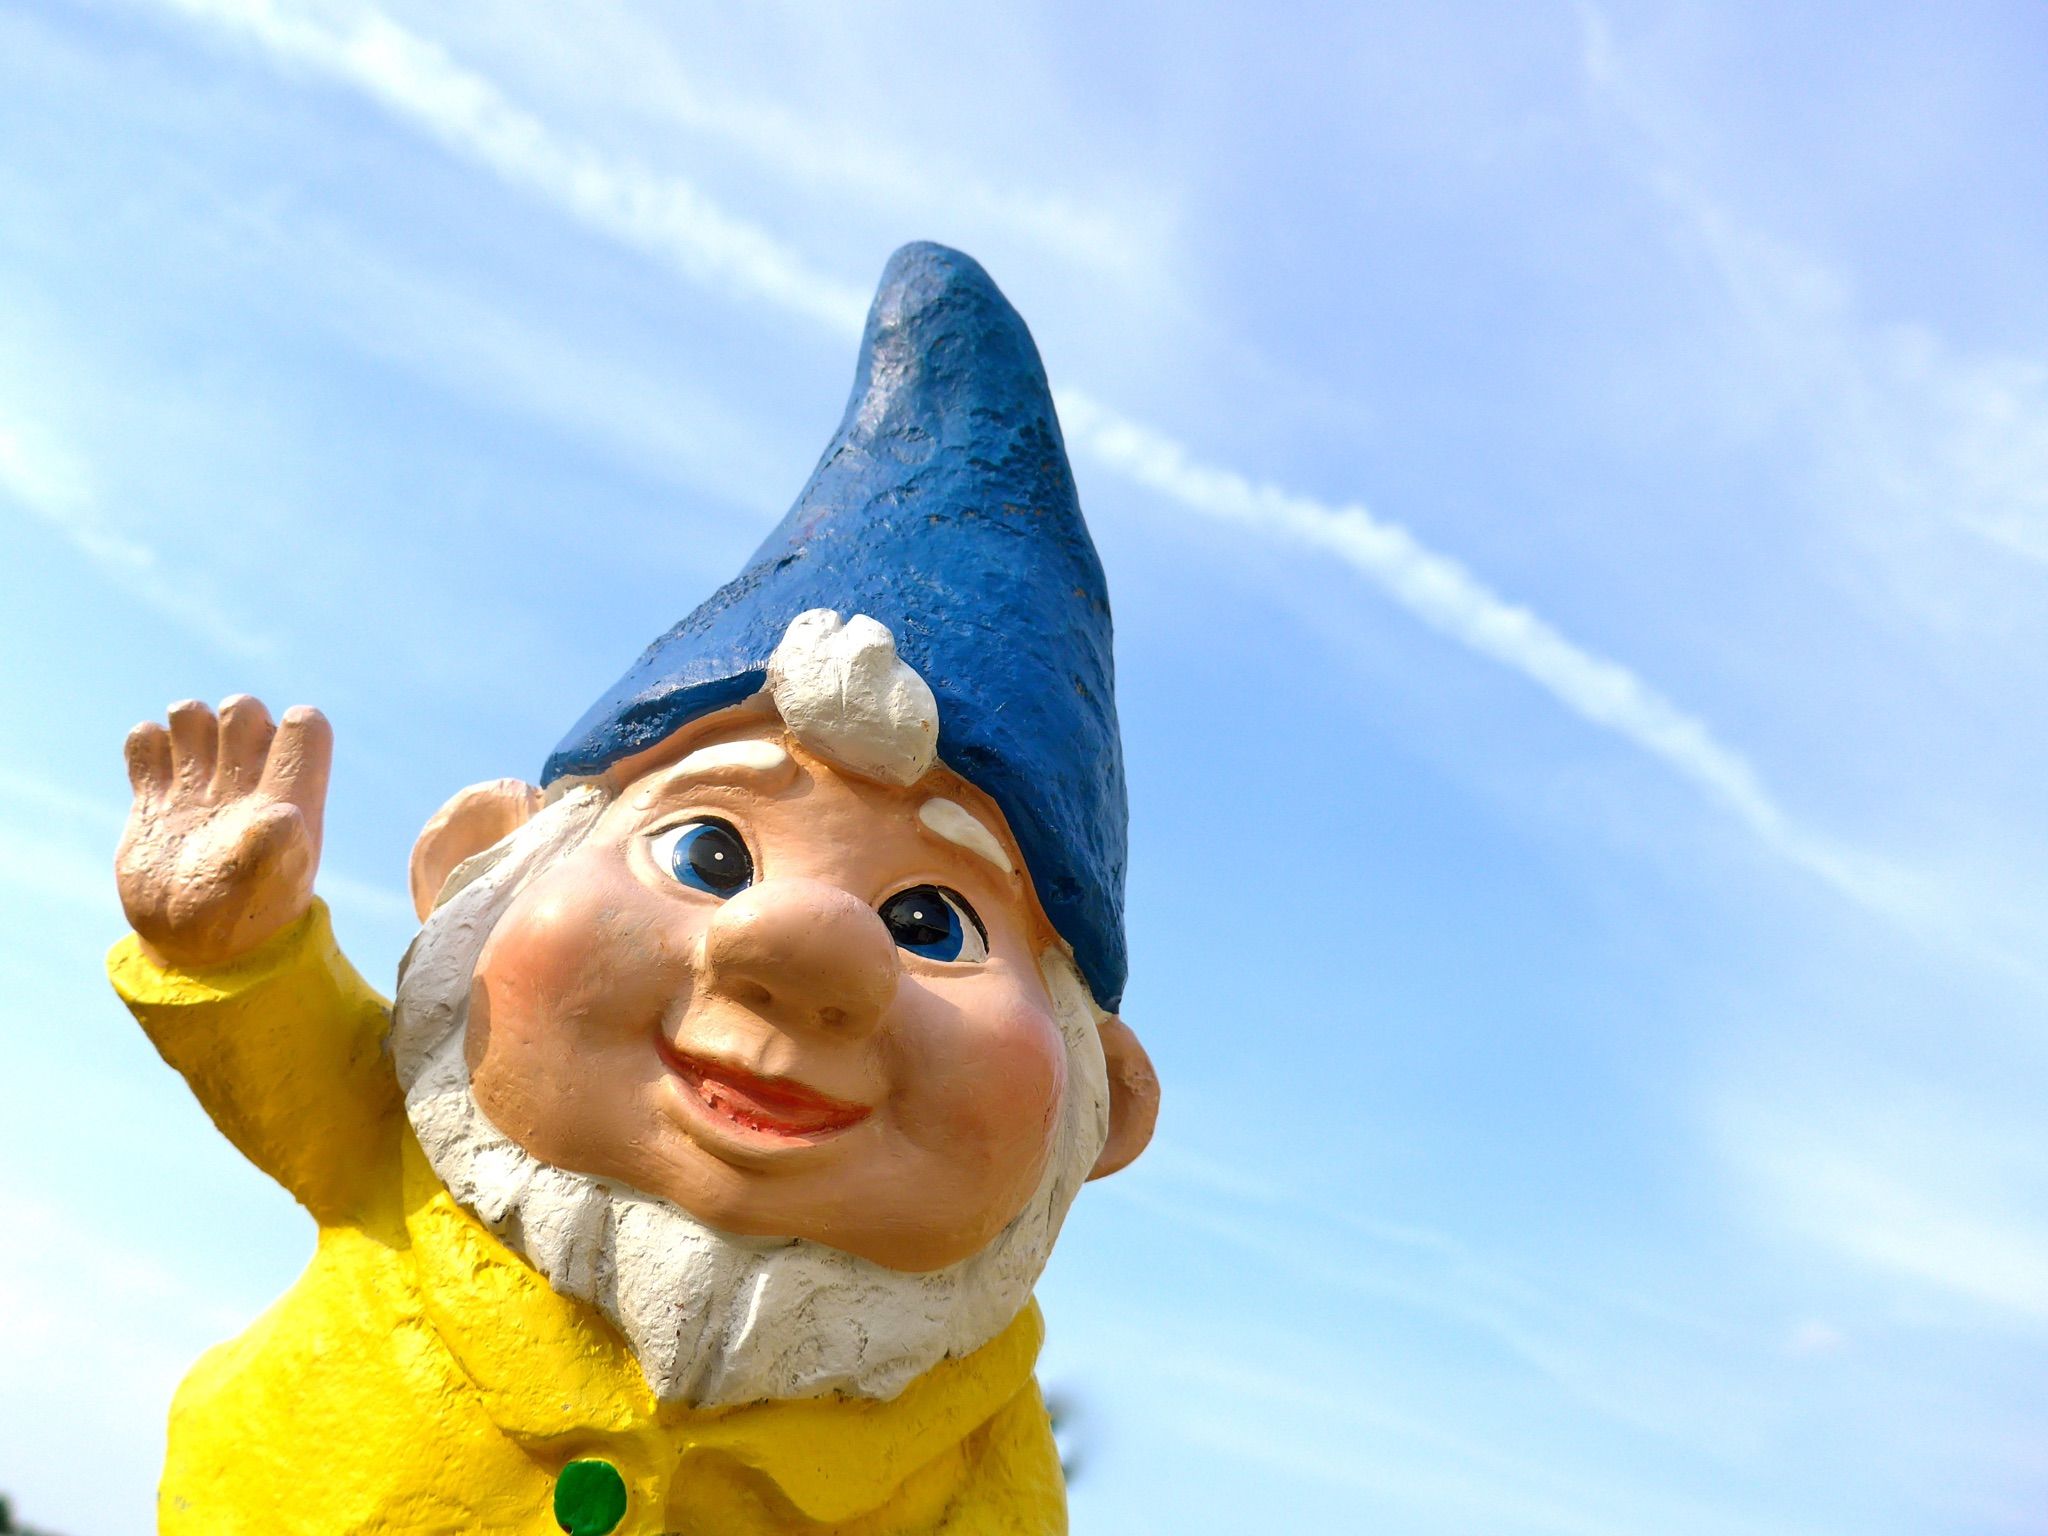 More than 30 Gnomes Stolen from Felixstowe Garden